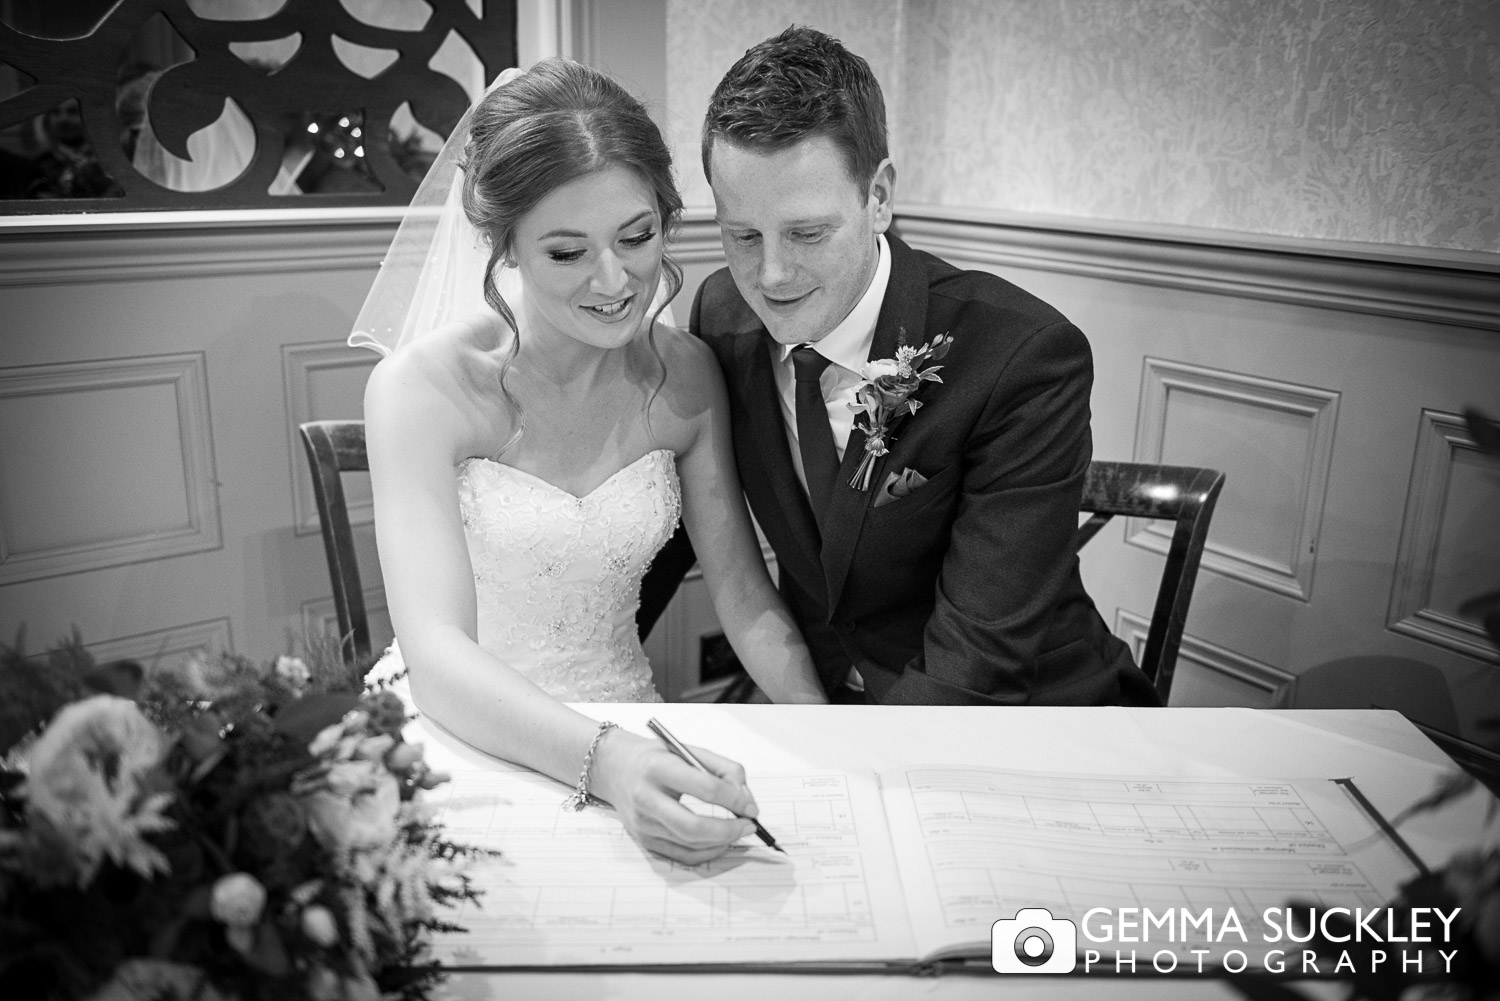 bride and groom signing the registrar